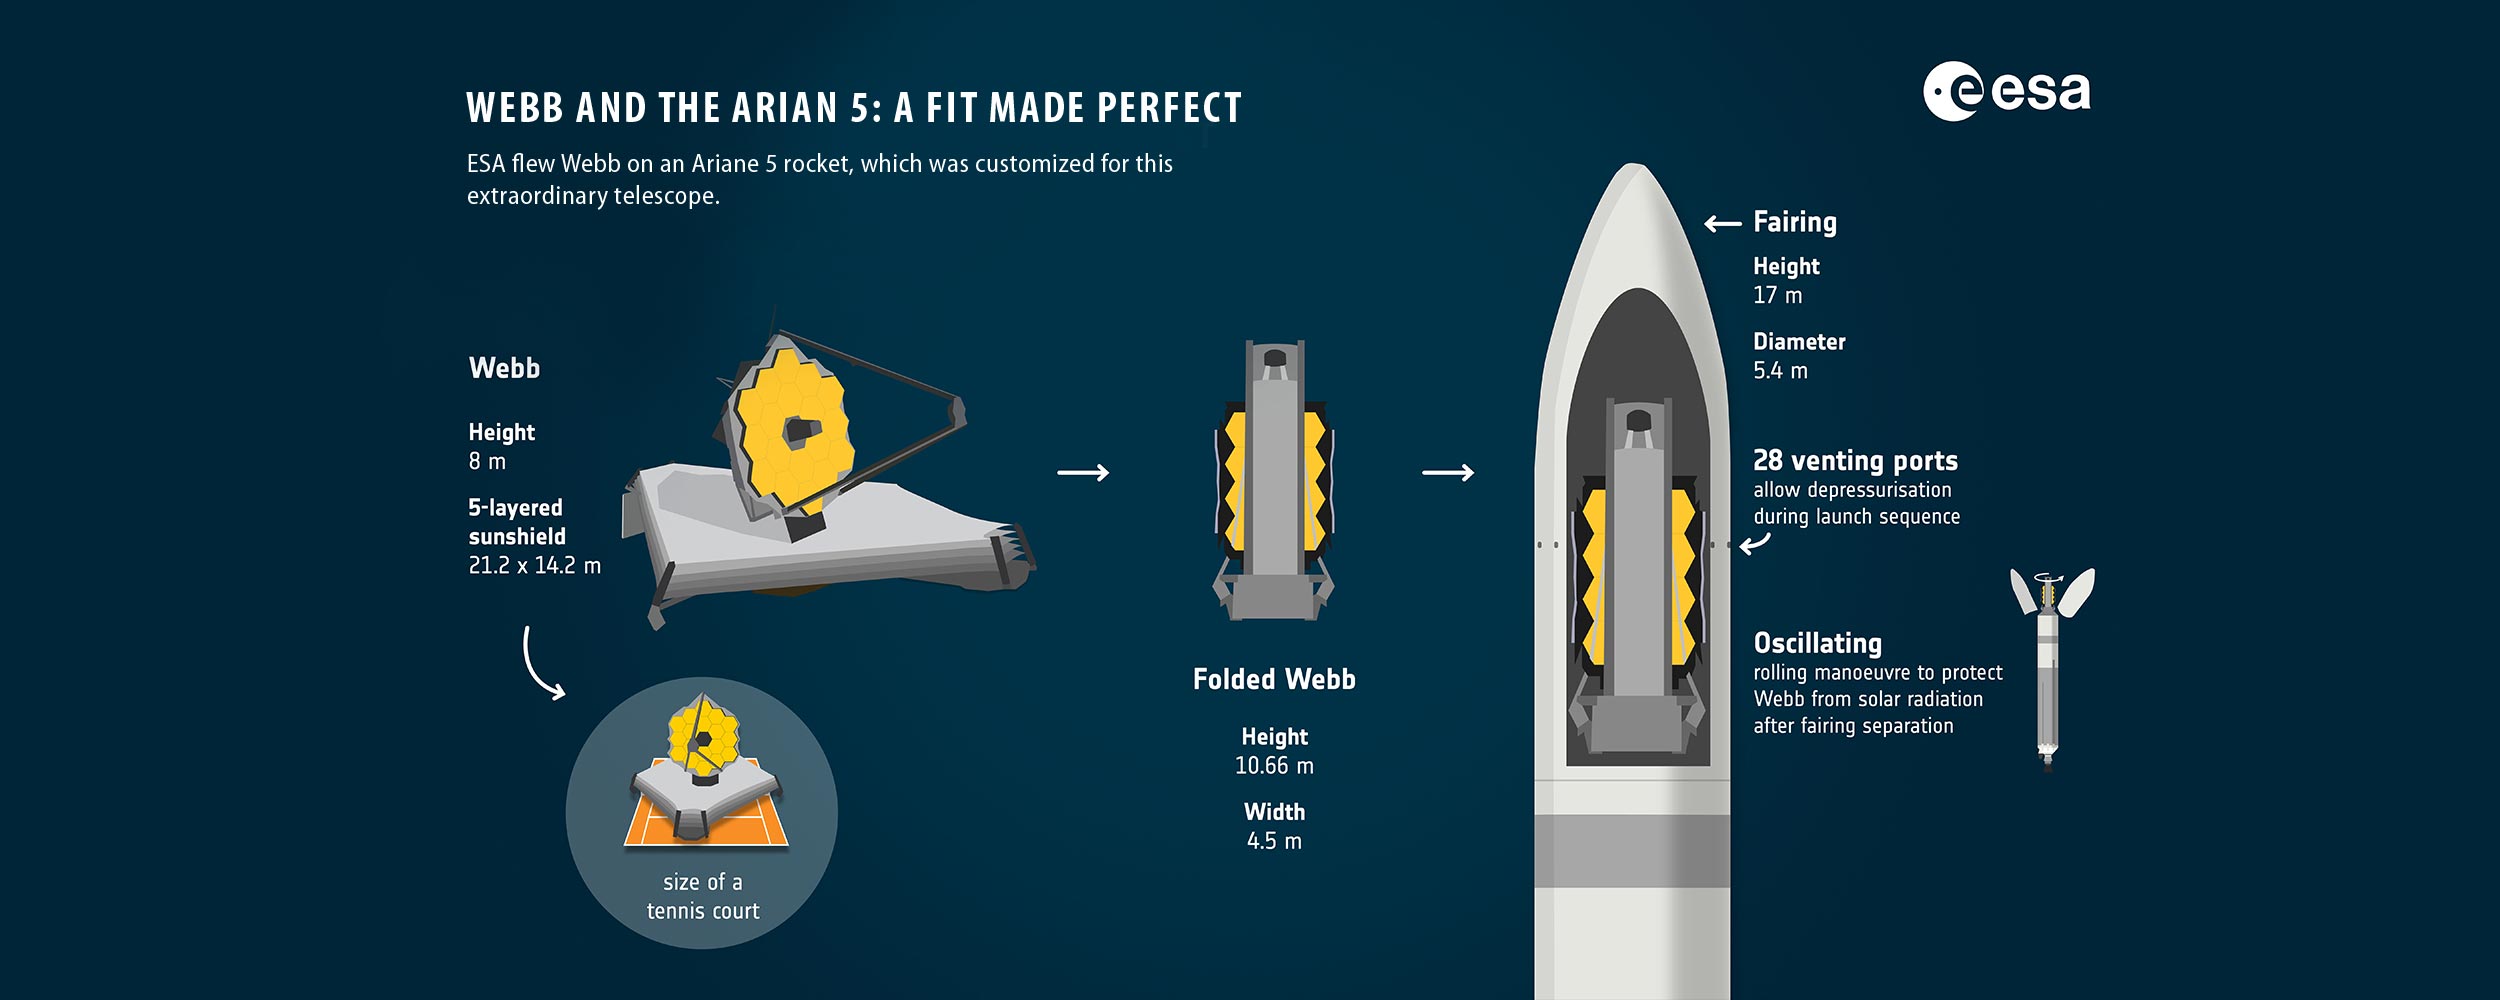 Infographic of Webb Telescope folding into Ariane 5 rocket